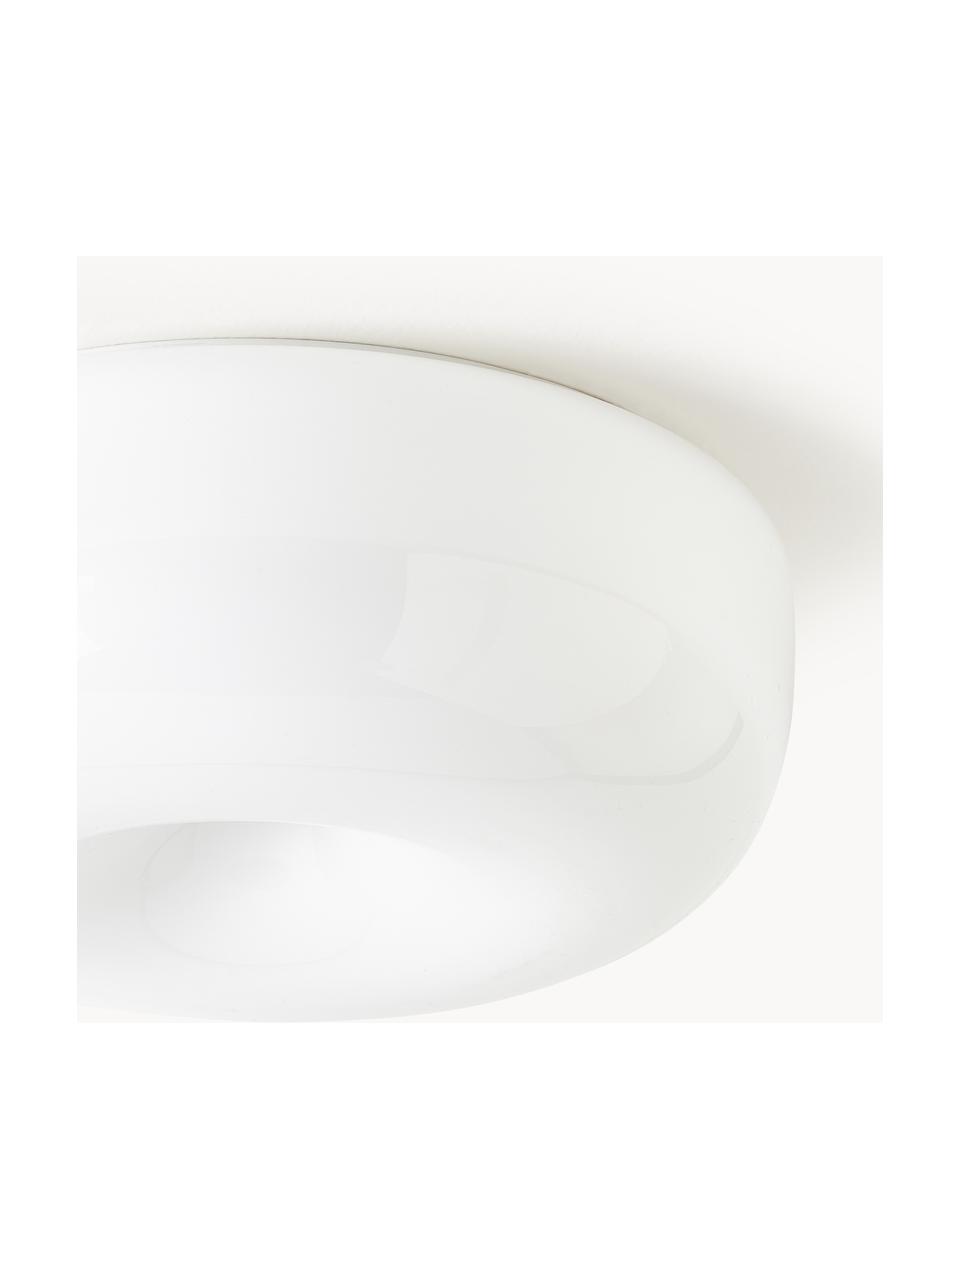 LED plafondlamp Pouff, Kunststof, gelakt, Wit, Ø 46 x H 16 cm